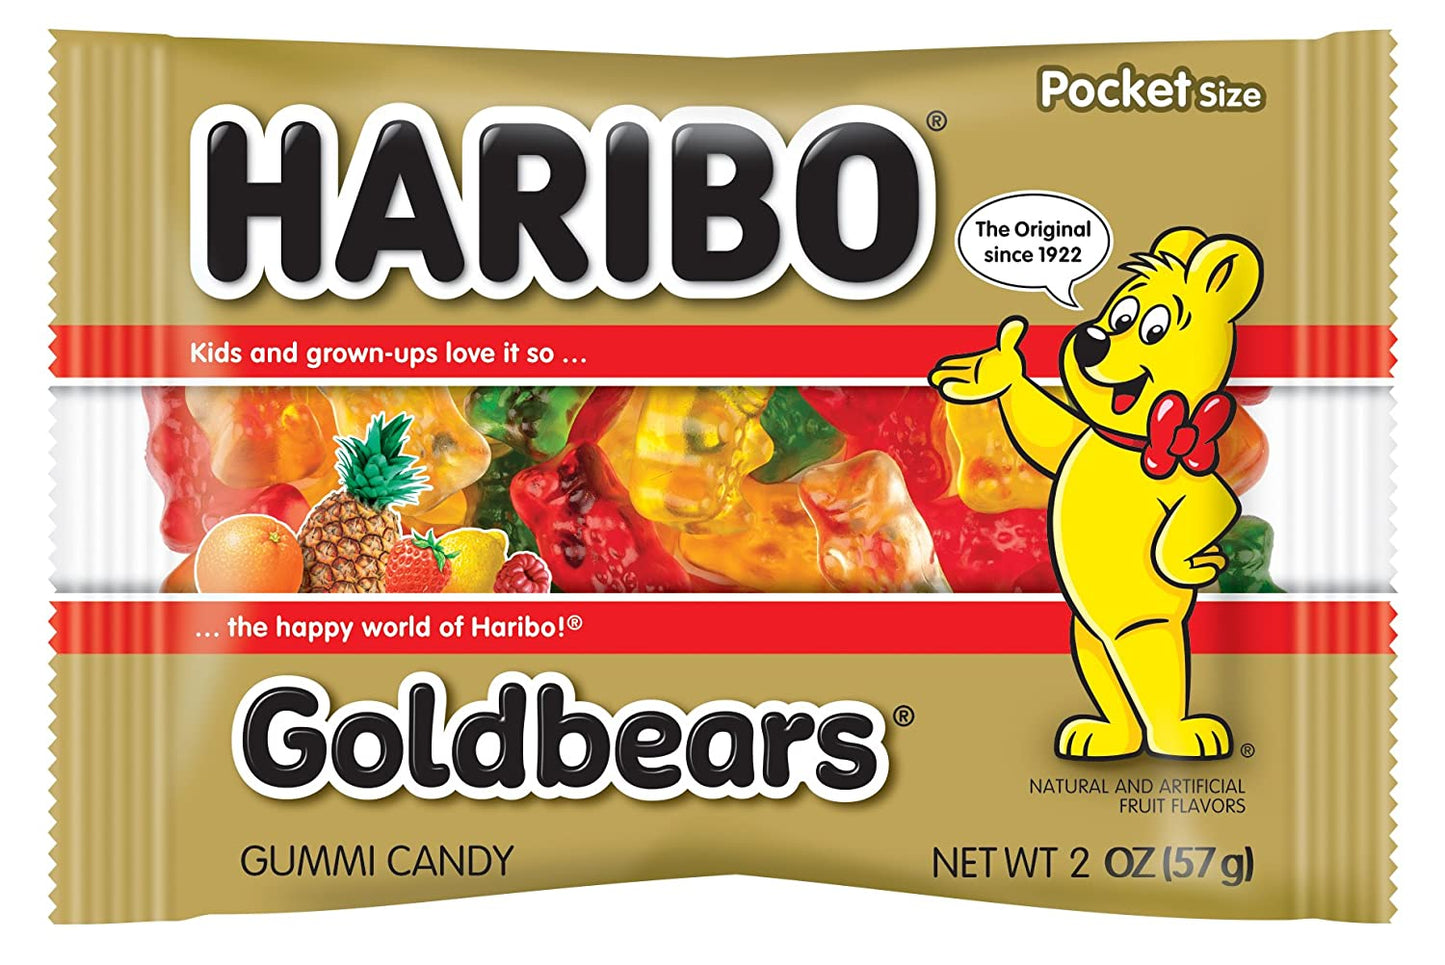 Haribo Pocket Sized Gummy Bears